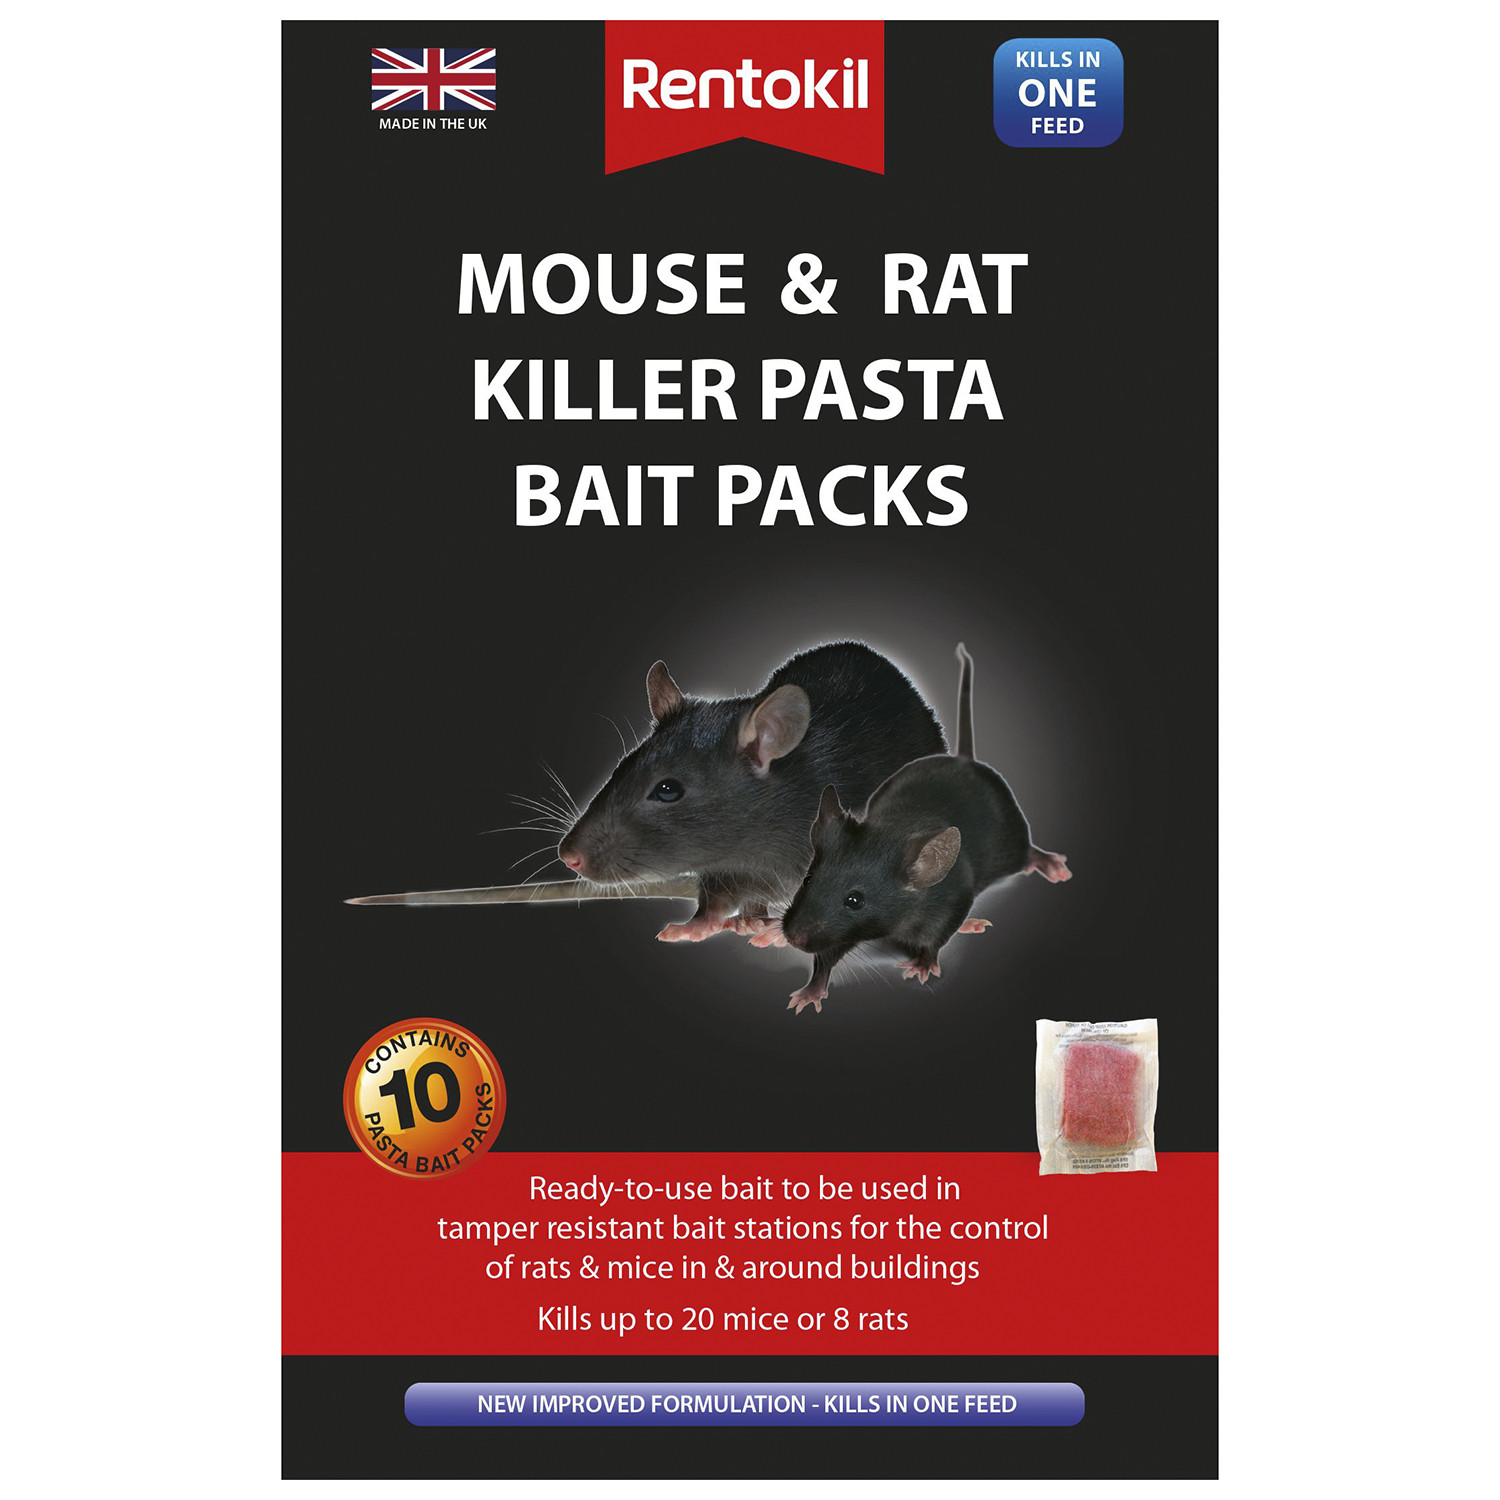 Pack of Rentokil Mouse and Rat Killer Pasta Bait Image 1